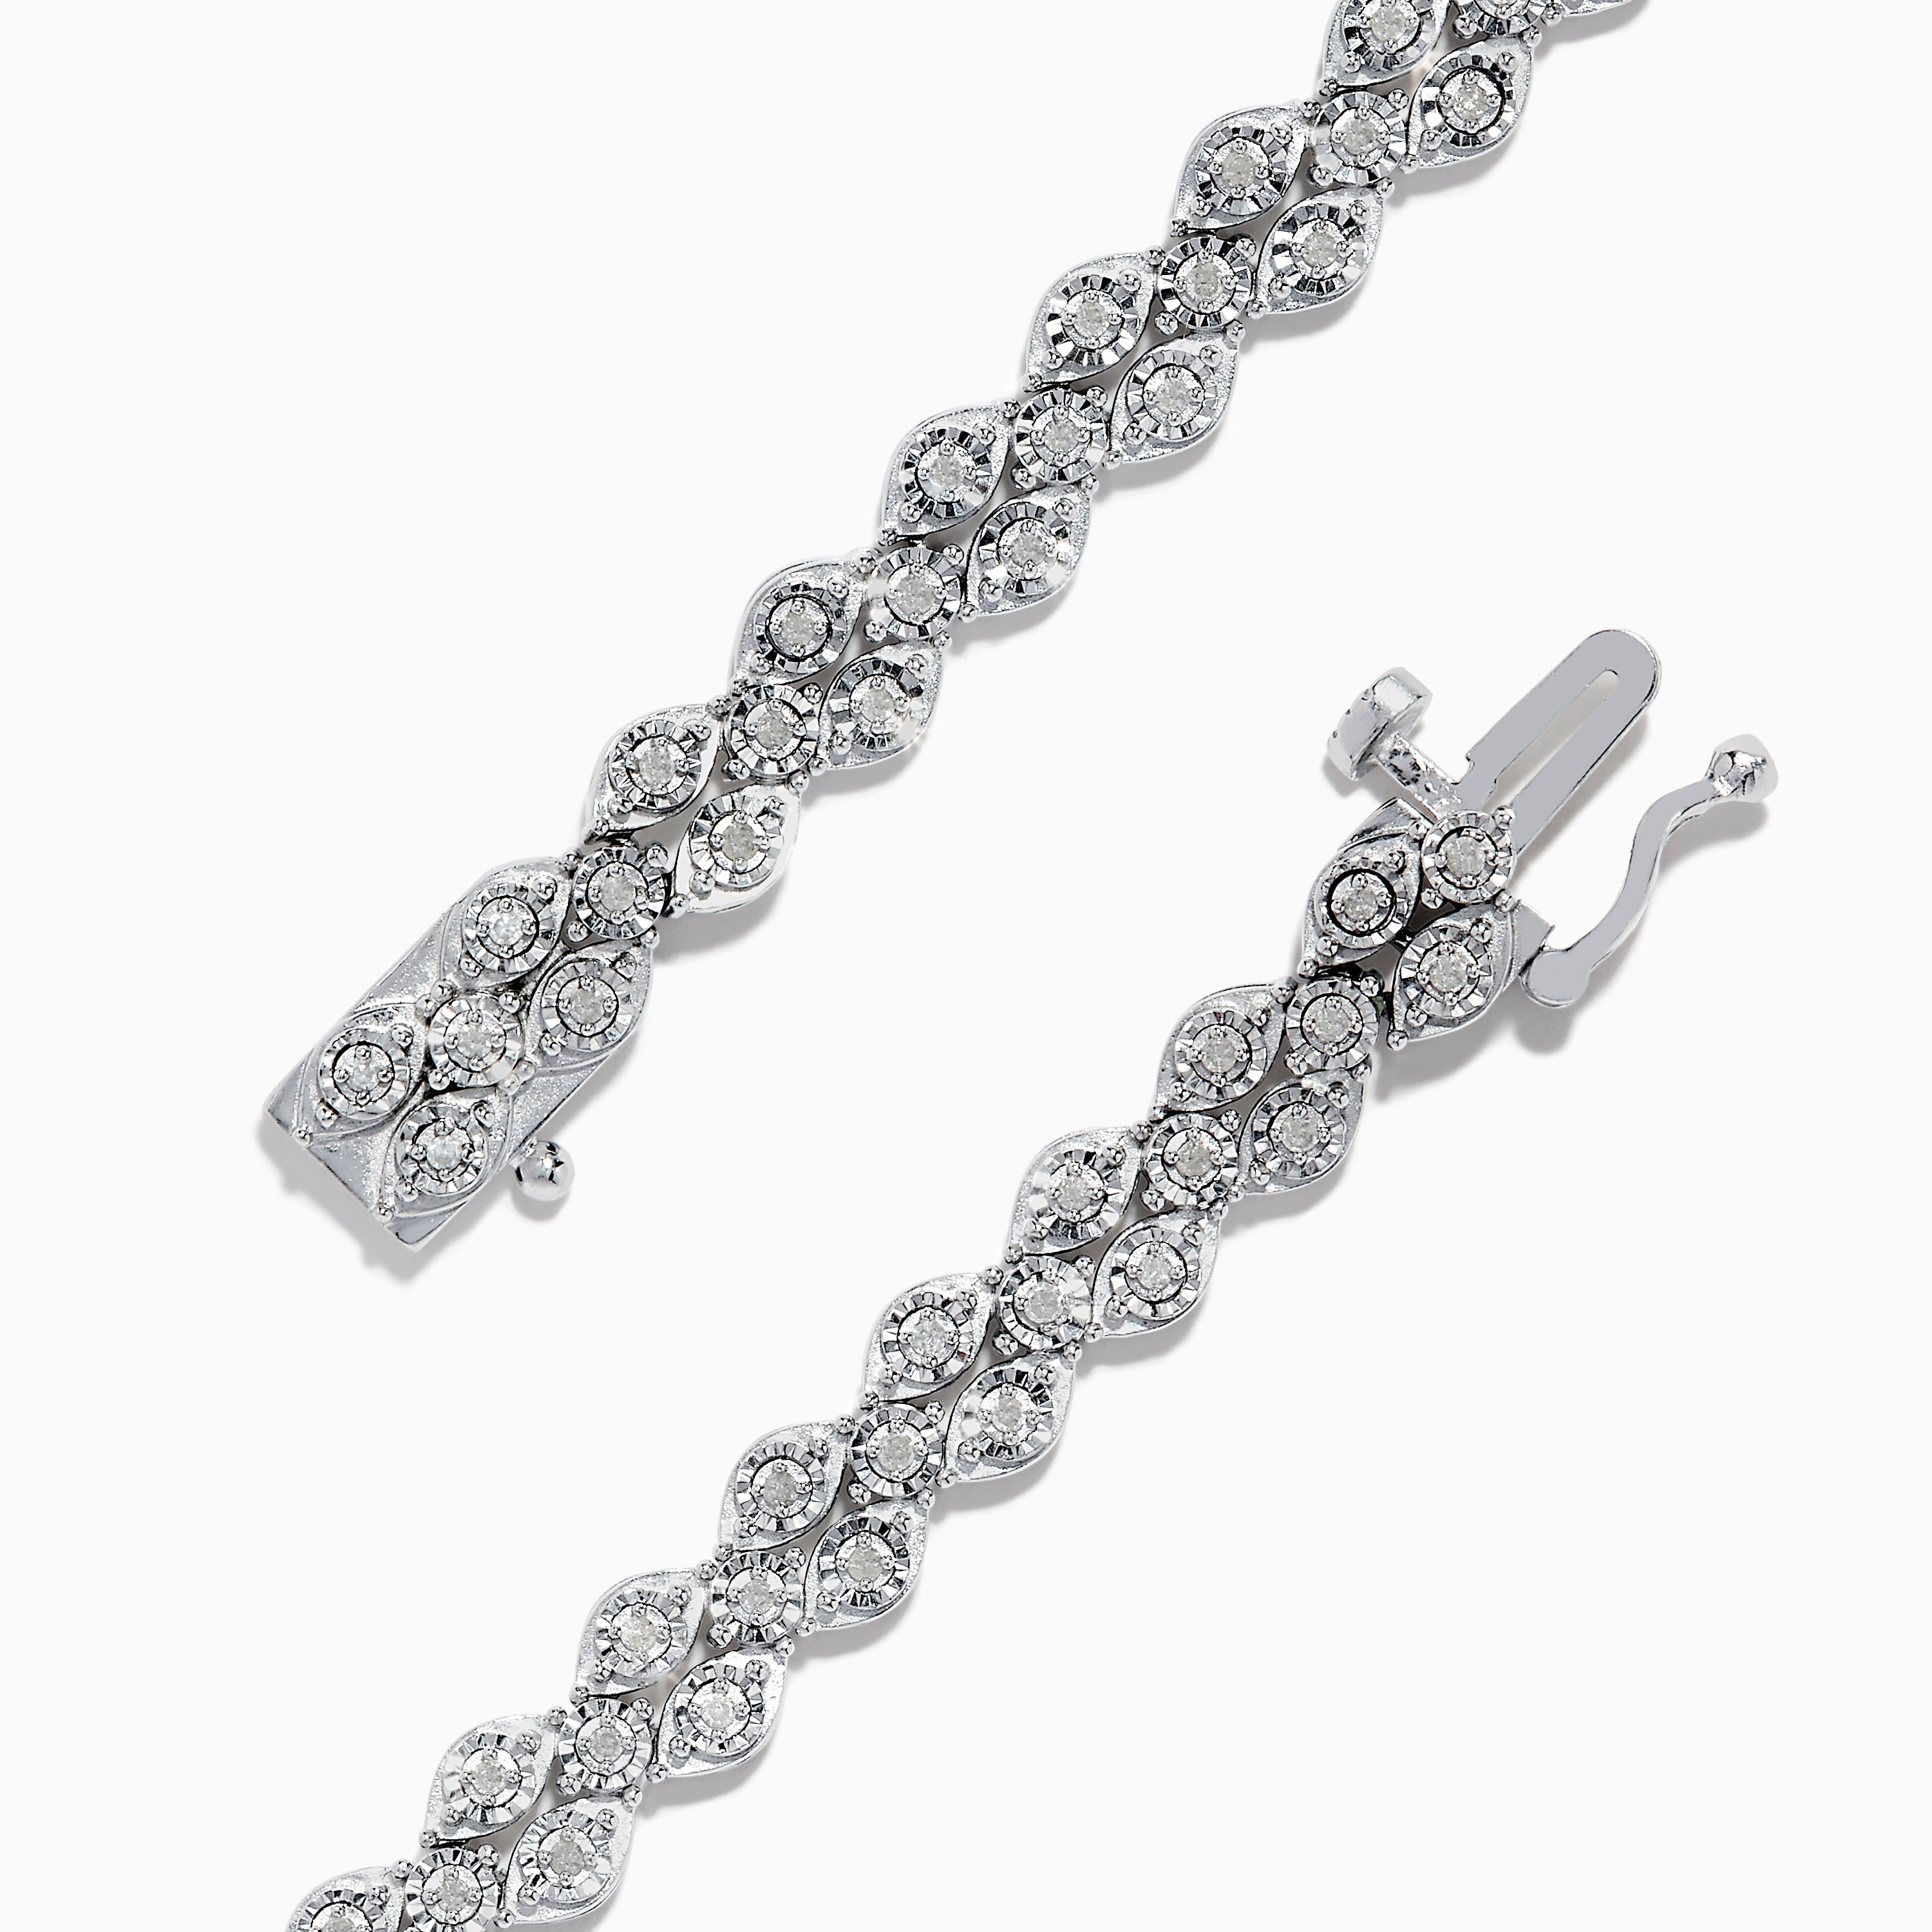 Buy METALM 925 Silver Minimal Cross Bracelet Online